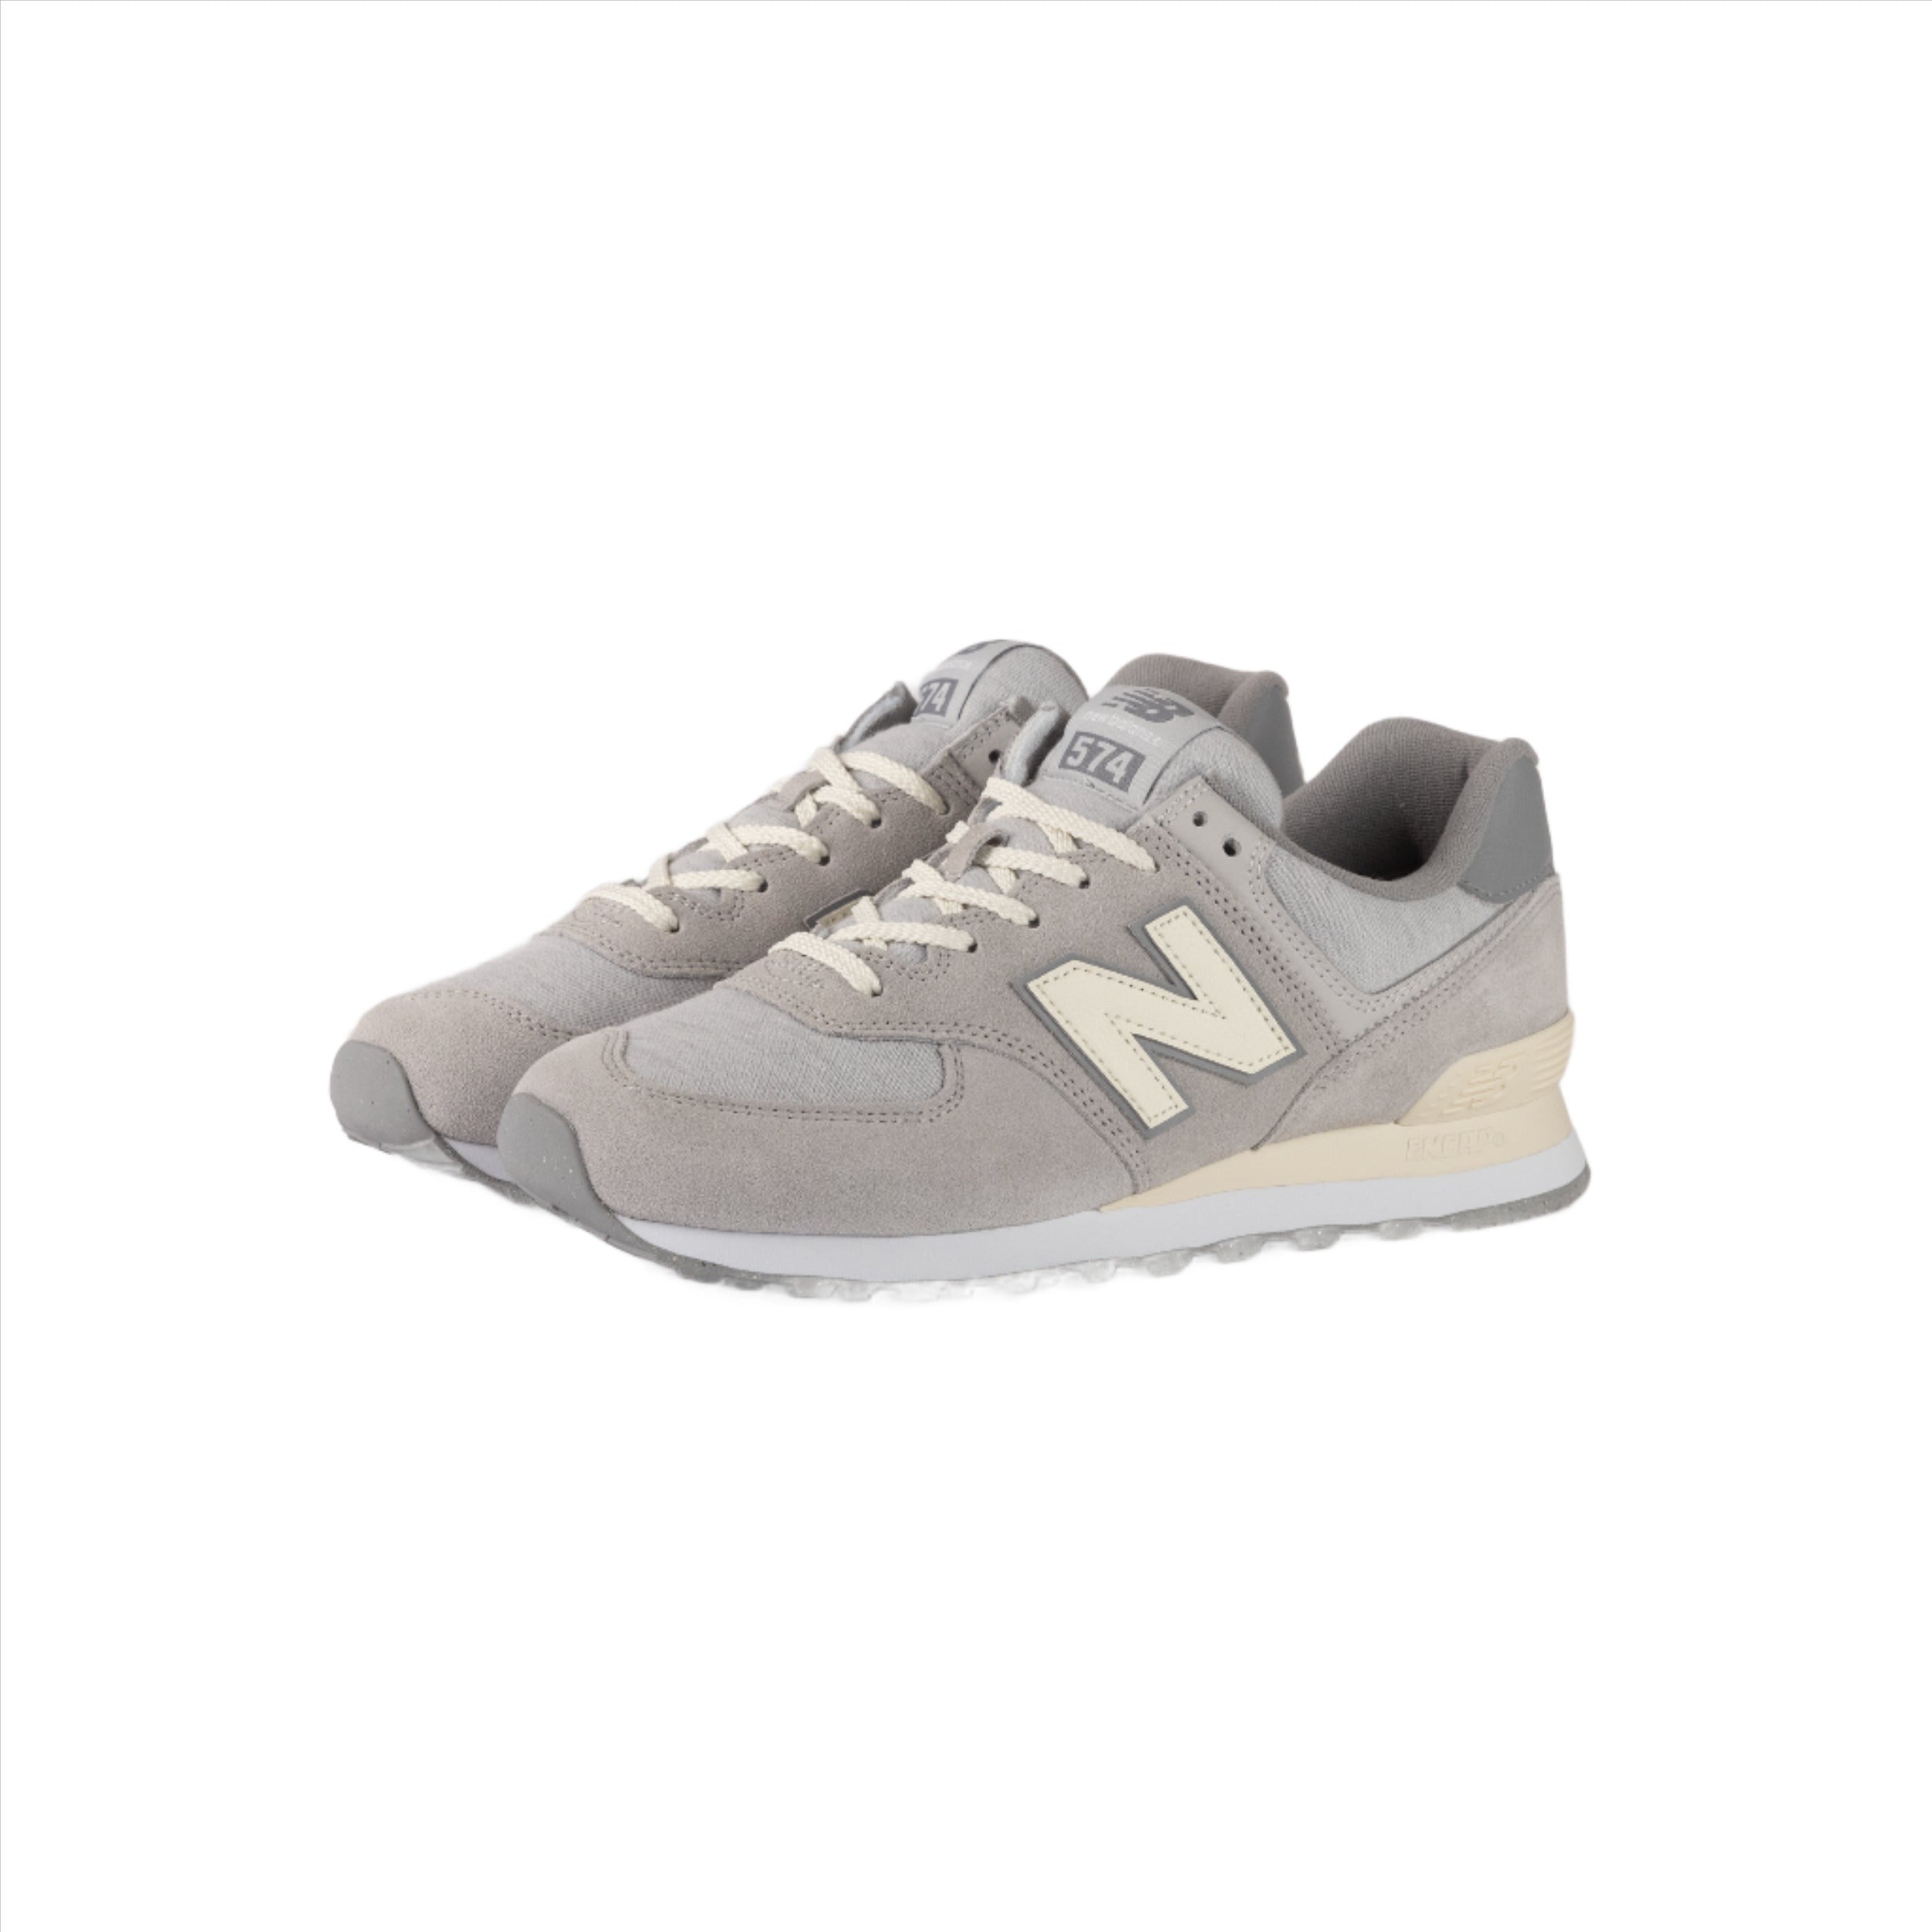 New Balance 574 - Grey Beige